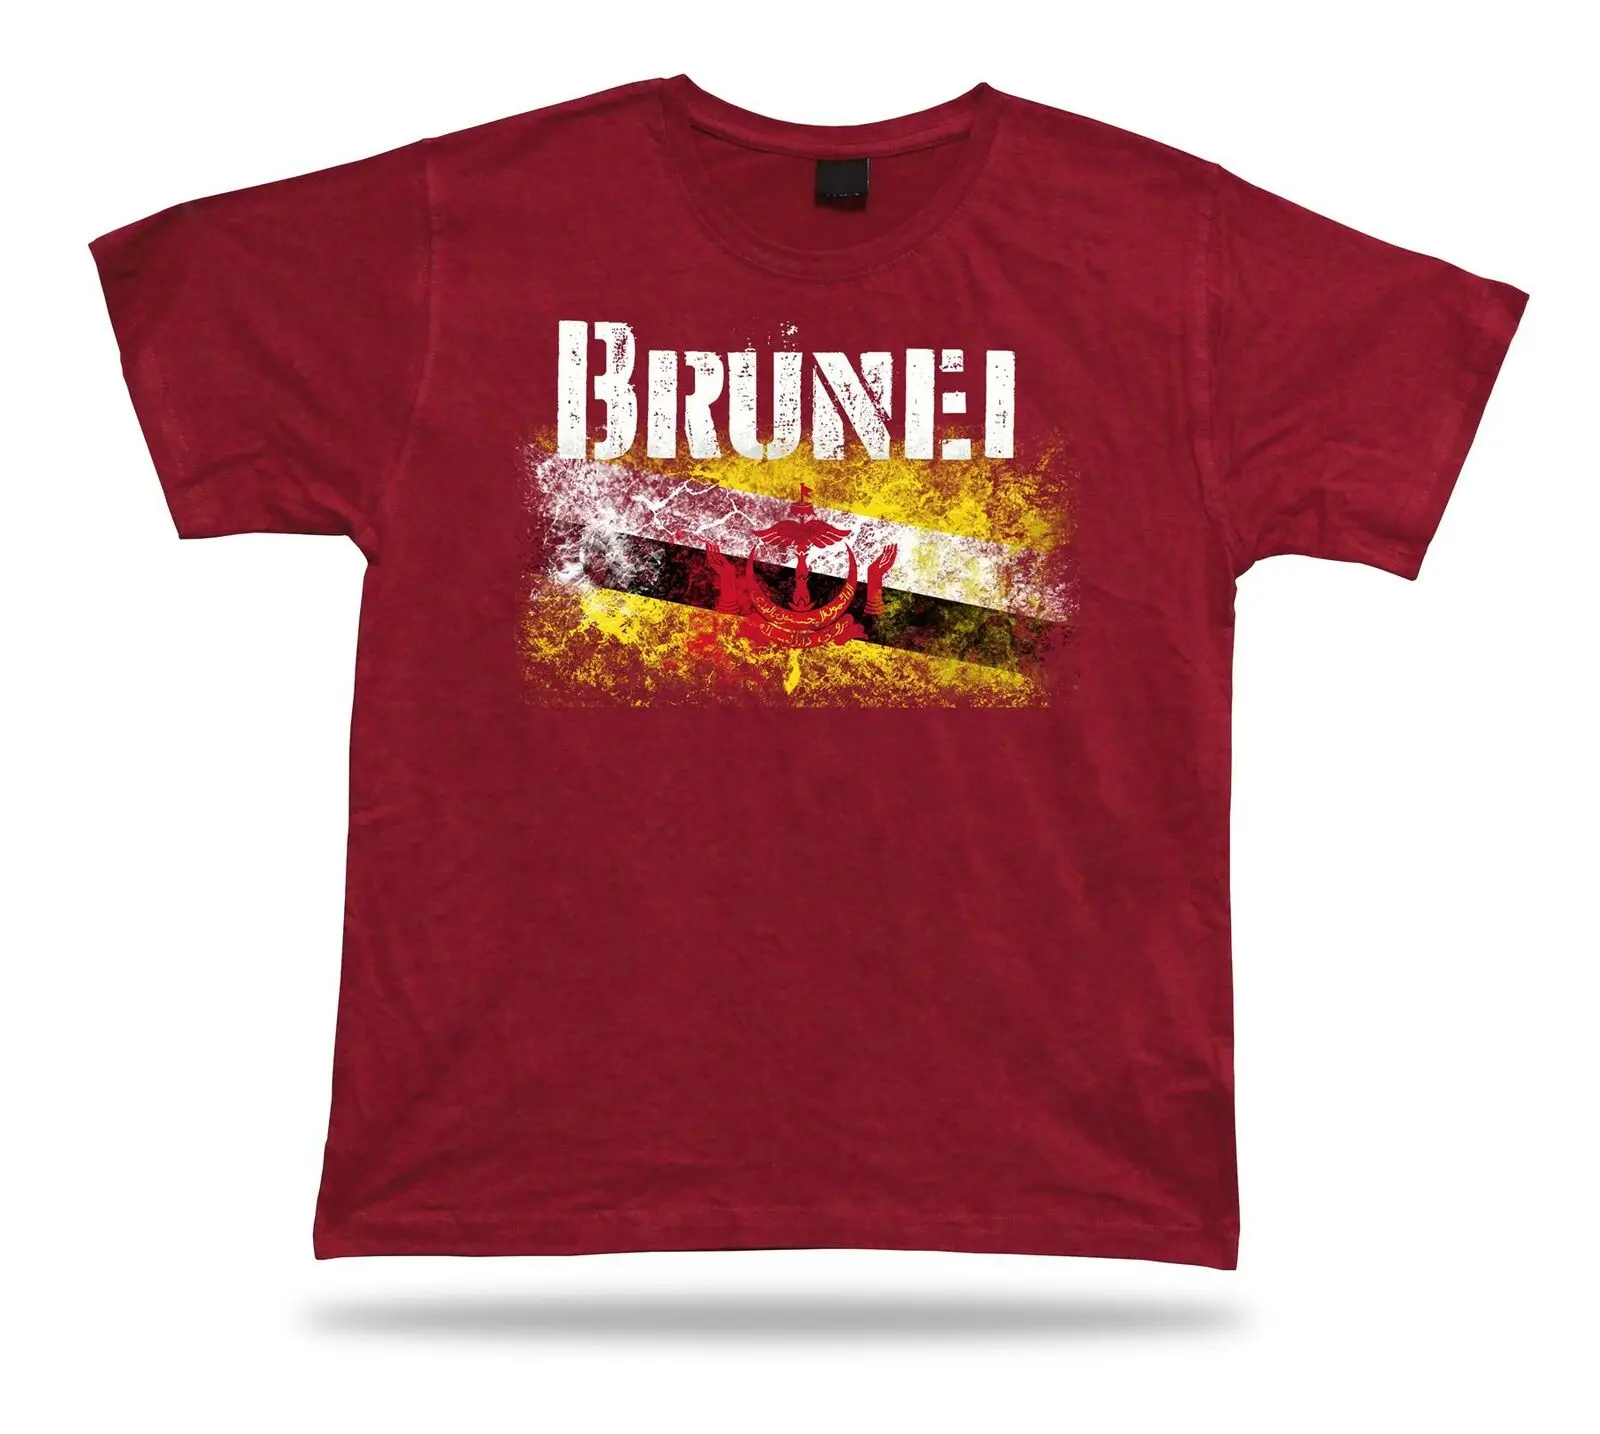 Фото Brunei flag Tshirt T shirt Tee top city map royalty Gods guidance best SOUVENIR | Мужская одежда